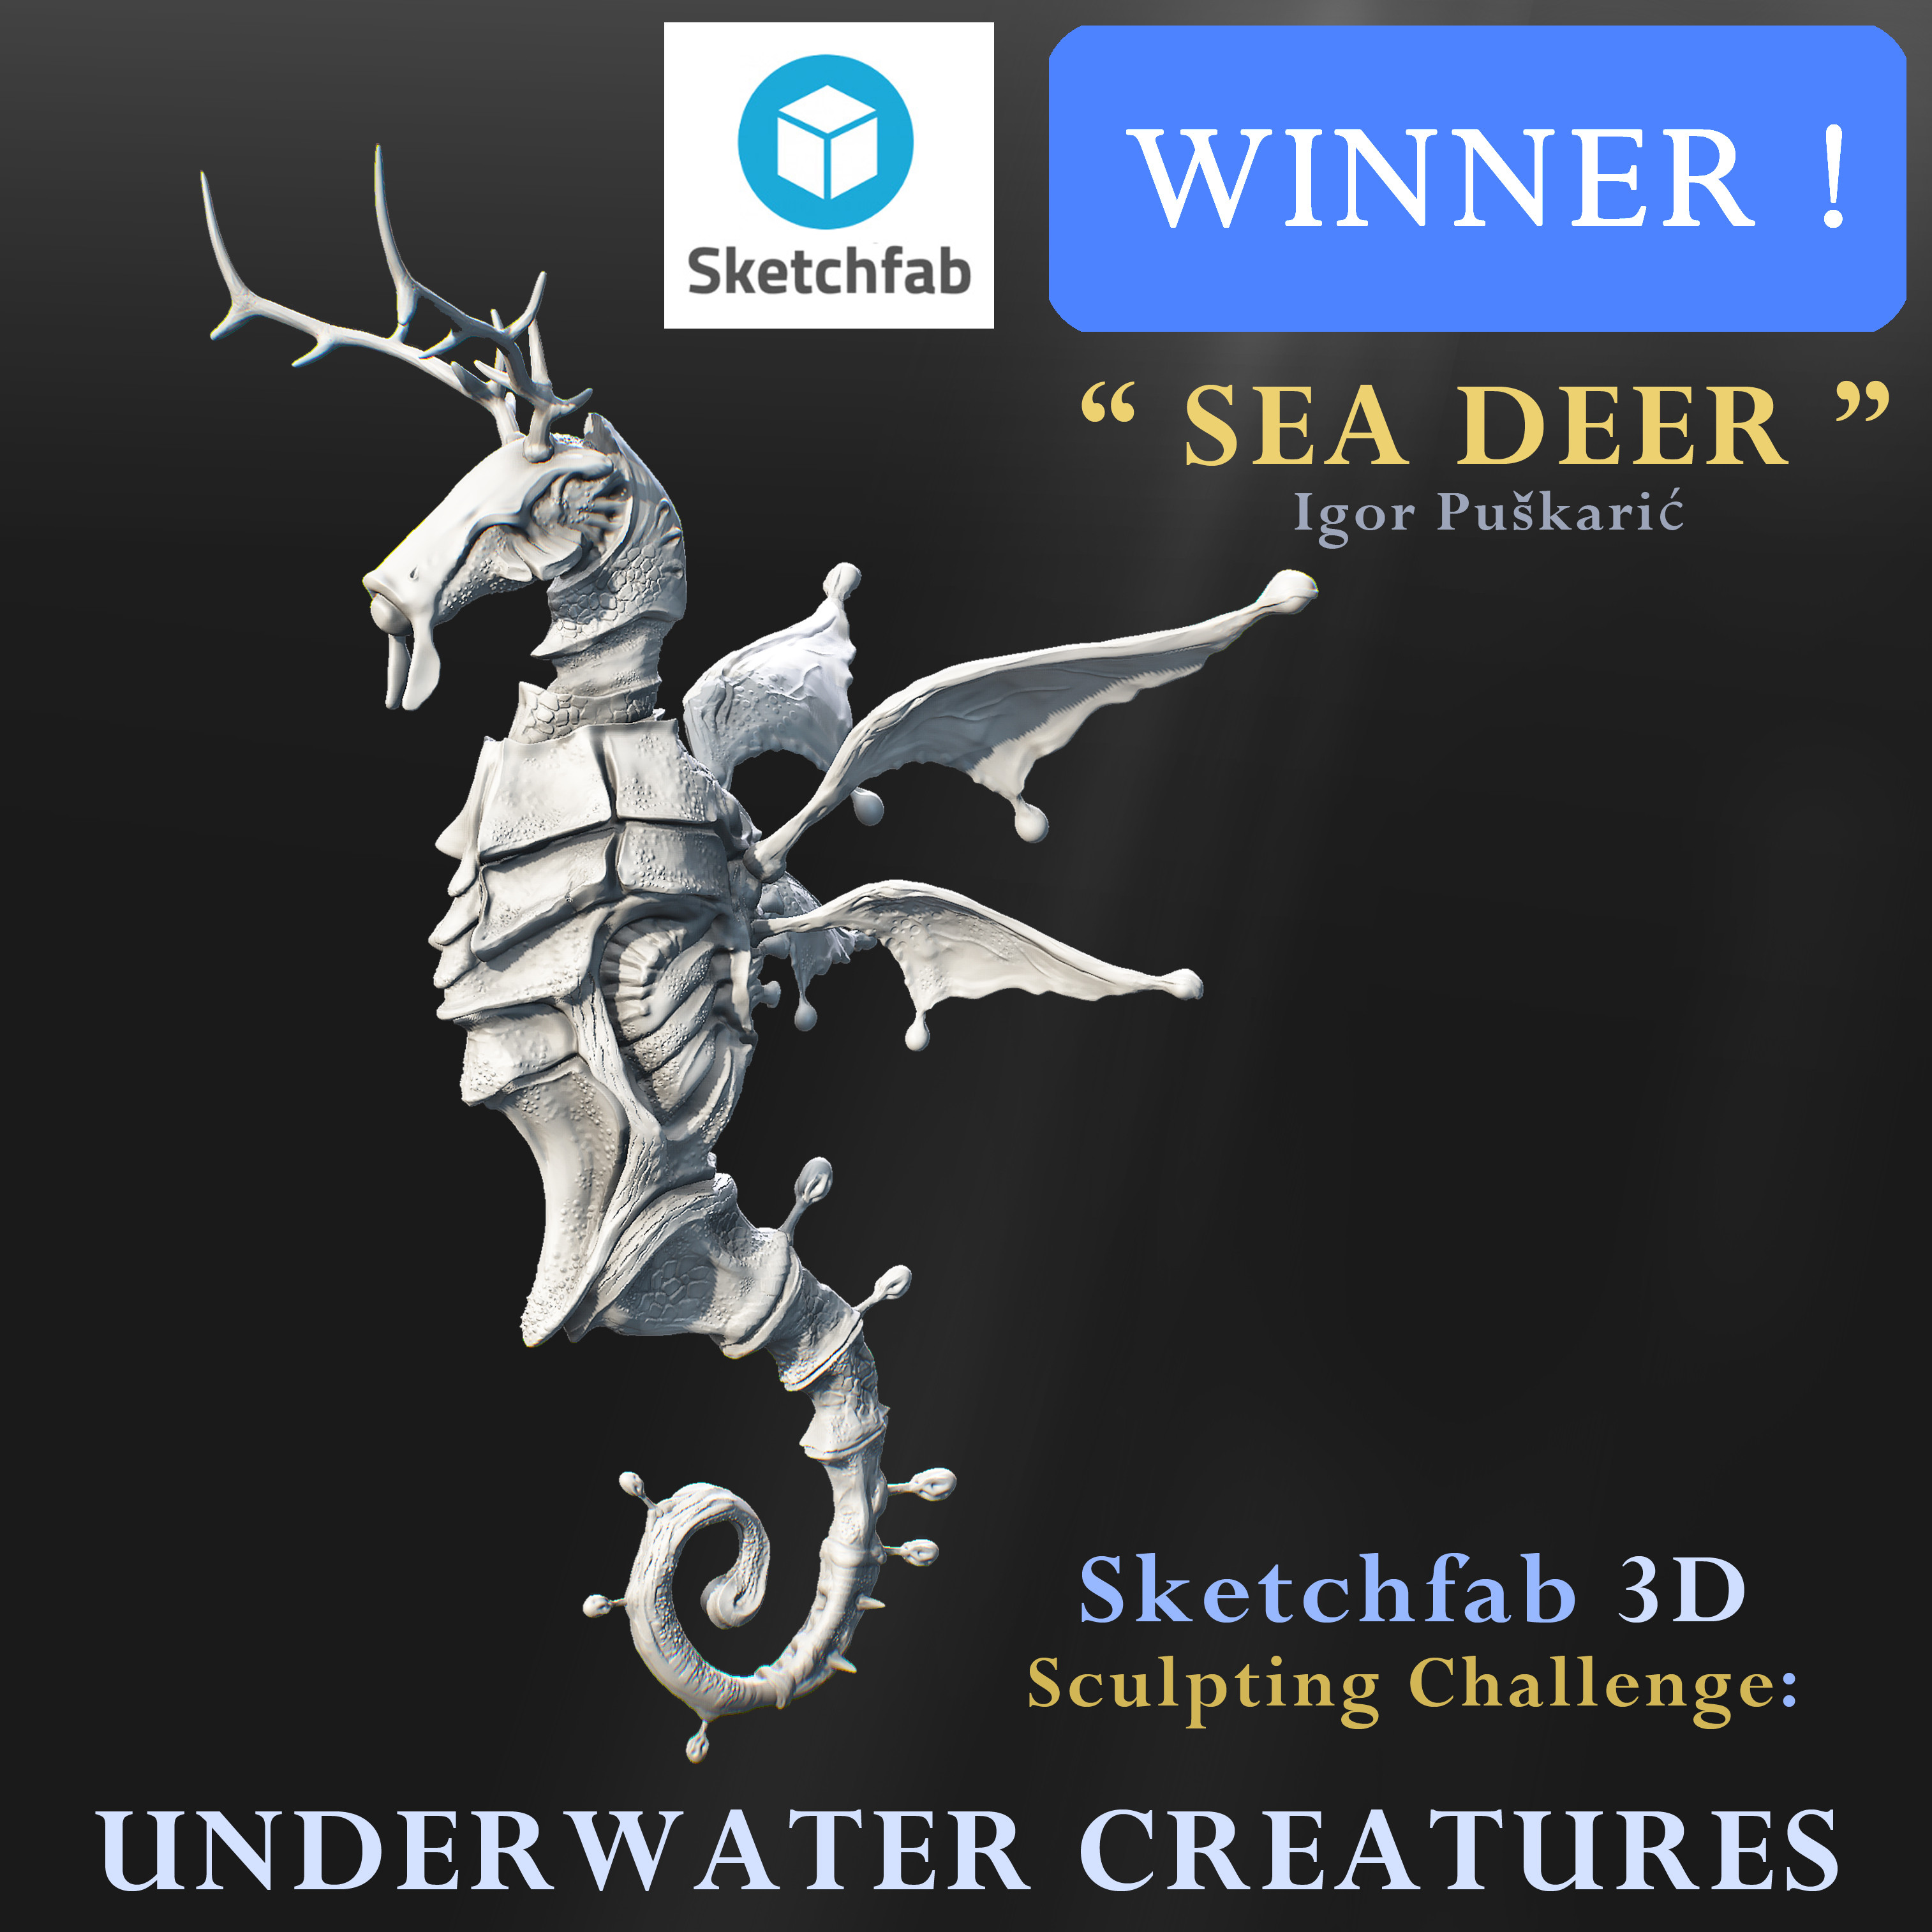 https://forum.sketchfab.com/t/sketchfab-3d-sculpting-challenge-underwater-creatures/12876/86